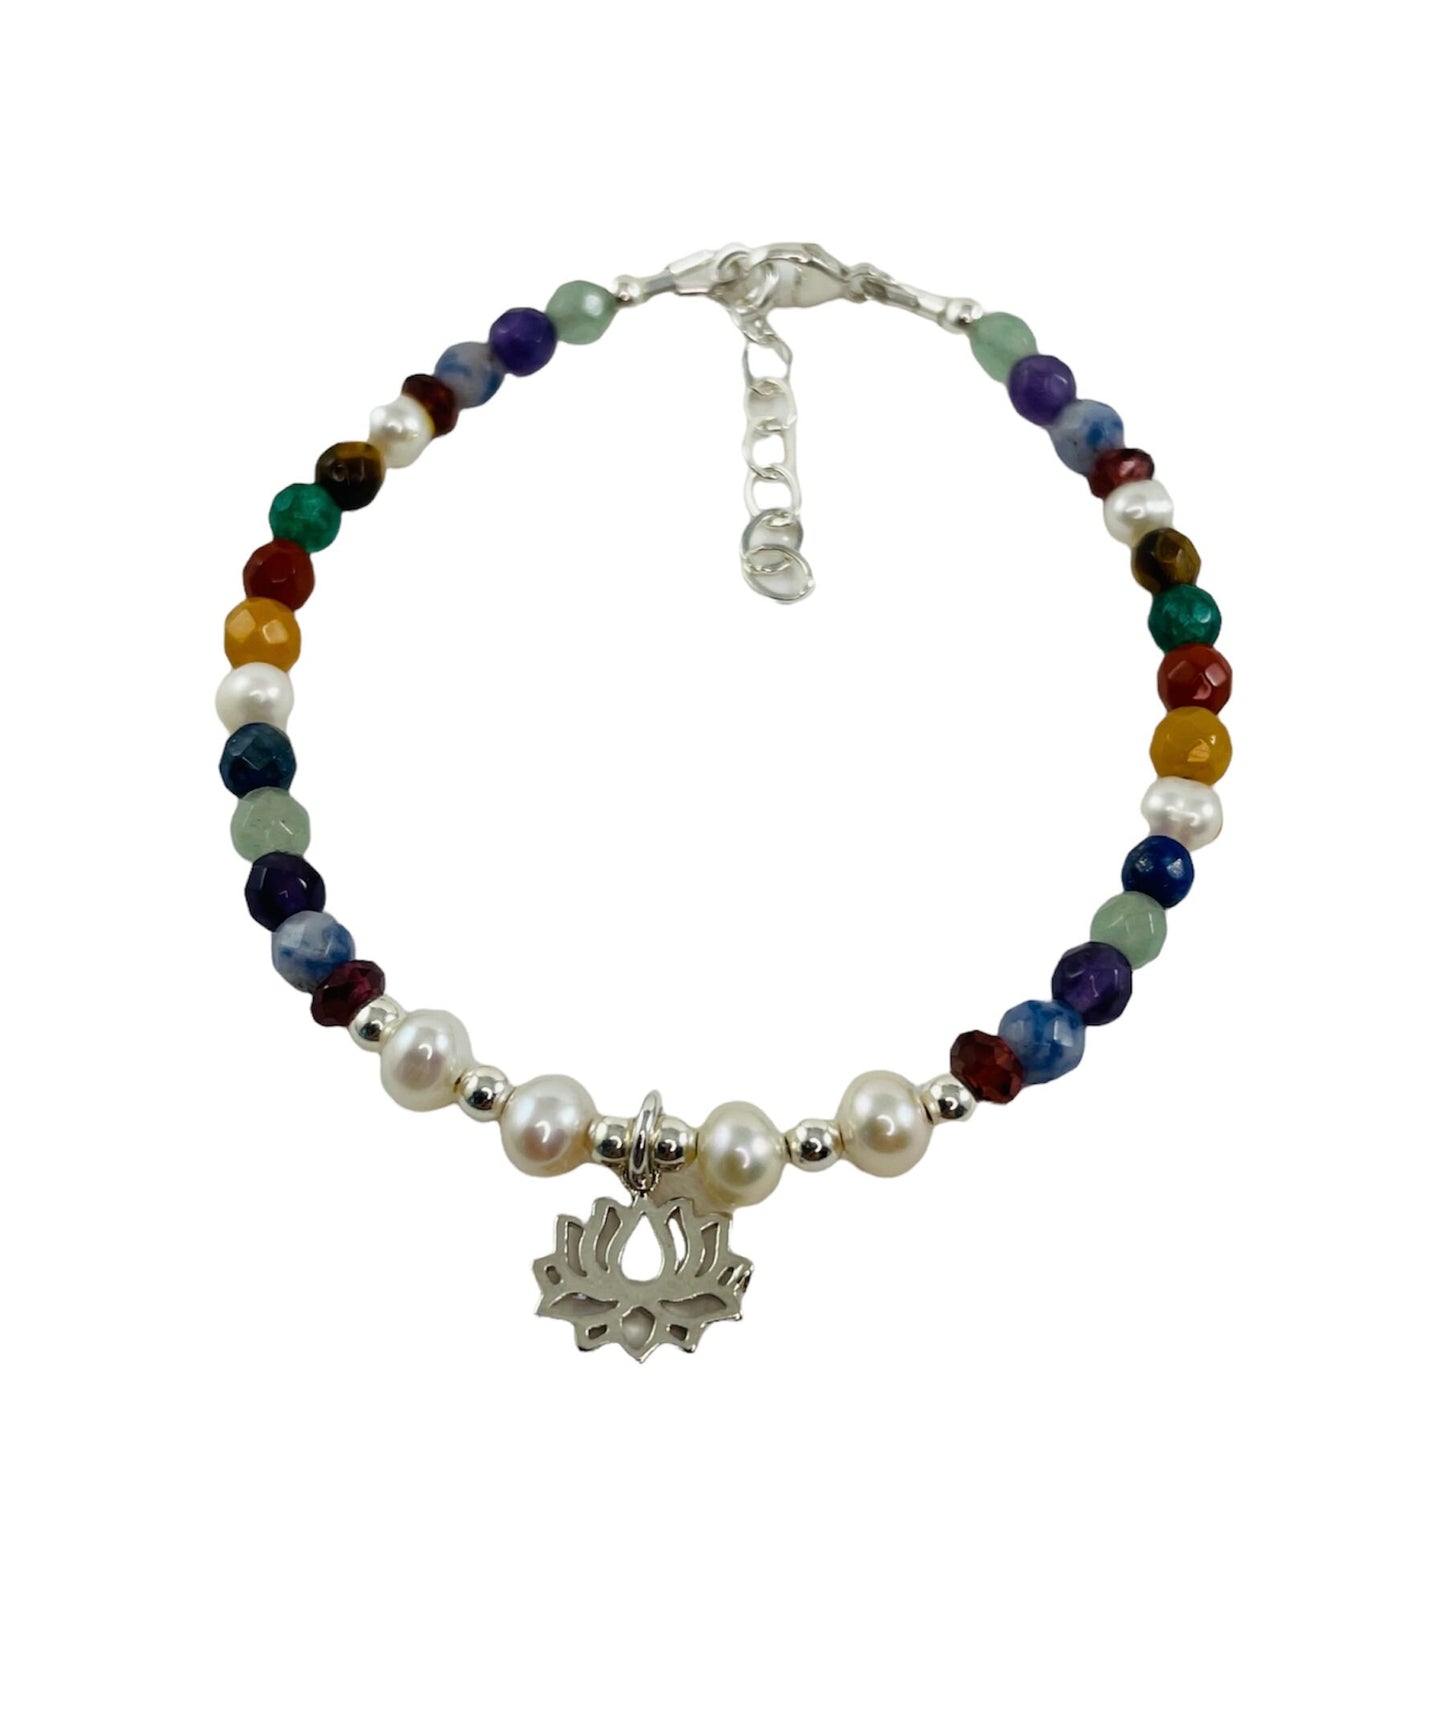 Multicolor Chakra Lotus Bracelet,Gemstone Beaded Bracelet,Healing Bracelet,Spiritual Meditation Zen Buddha Yoga Jewelry,Reiki,Gift for Him